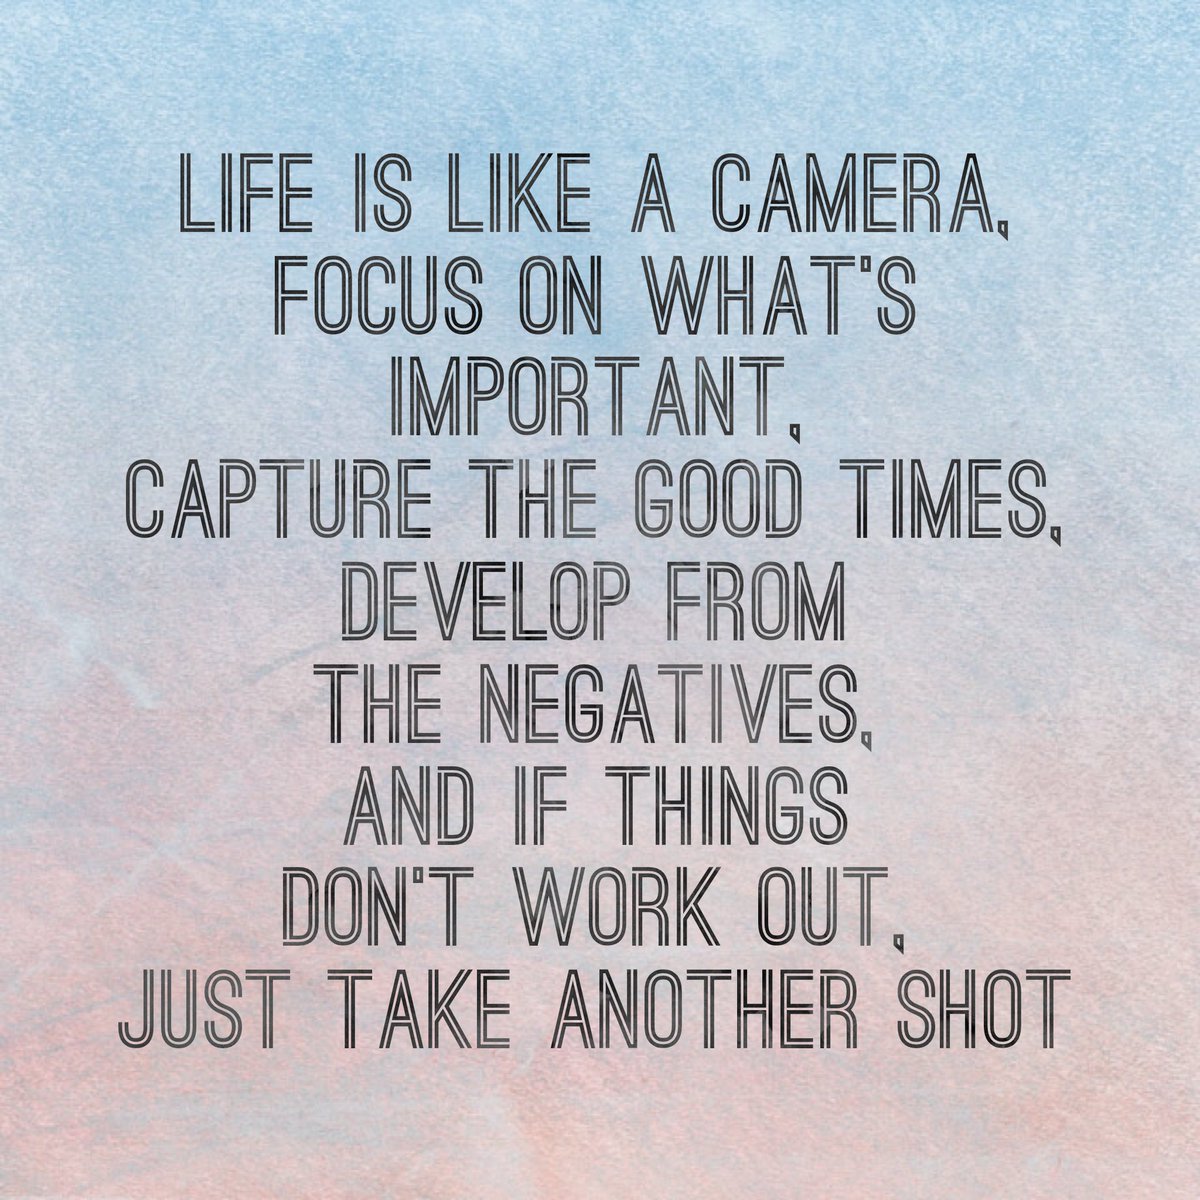 Life Is Like A Camera📸...
#lifeislikeacamera #quotes #takeanothershot 
@WordSwagApp